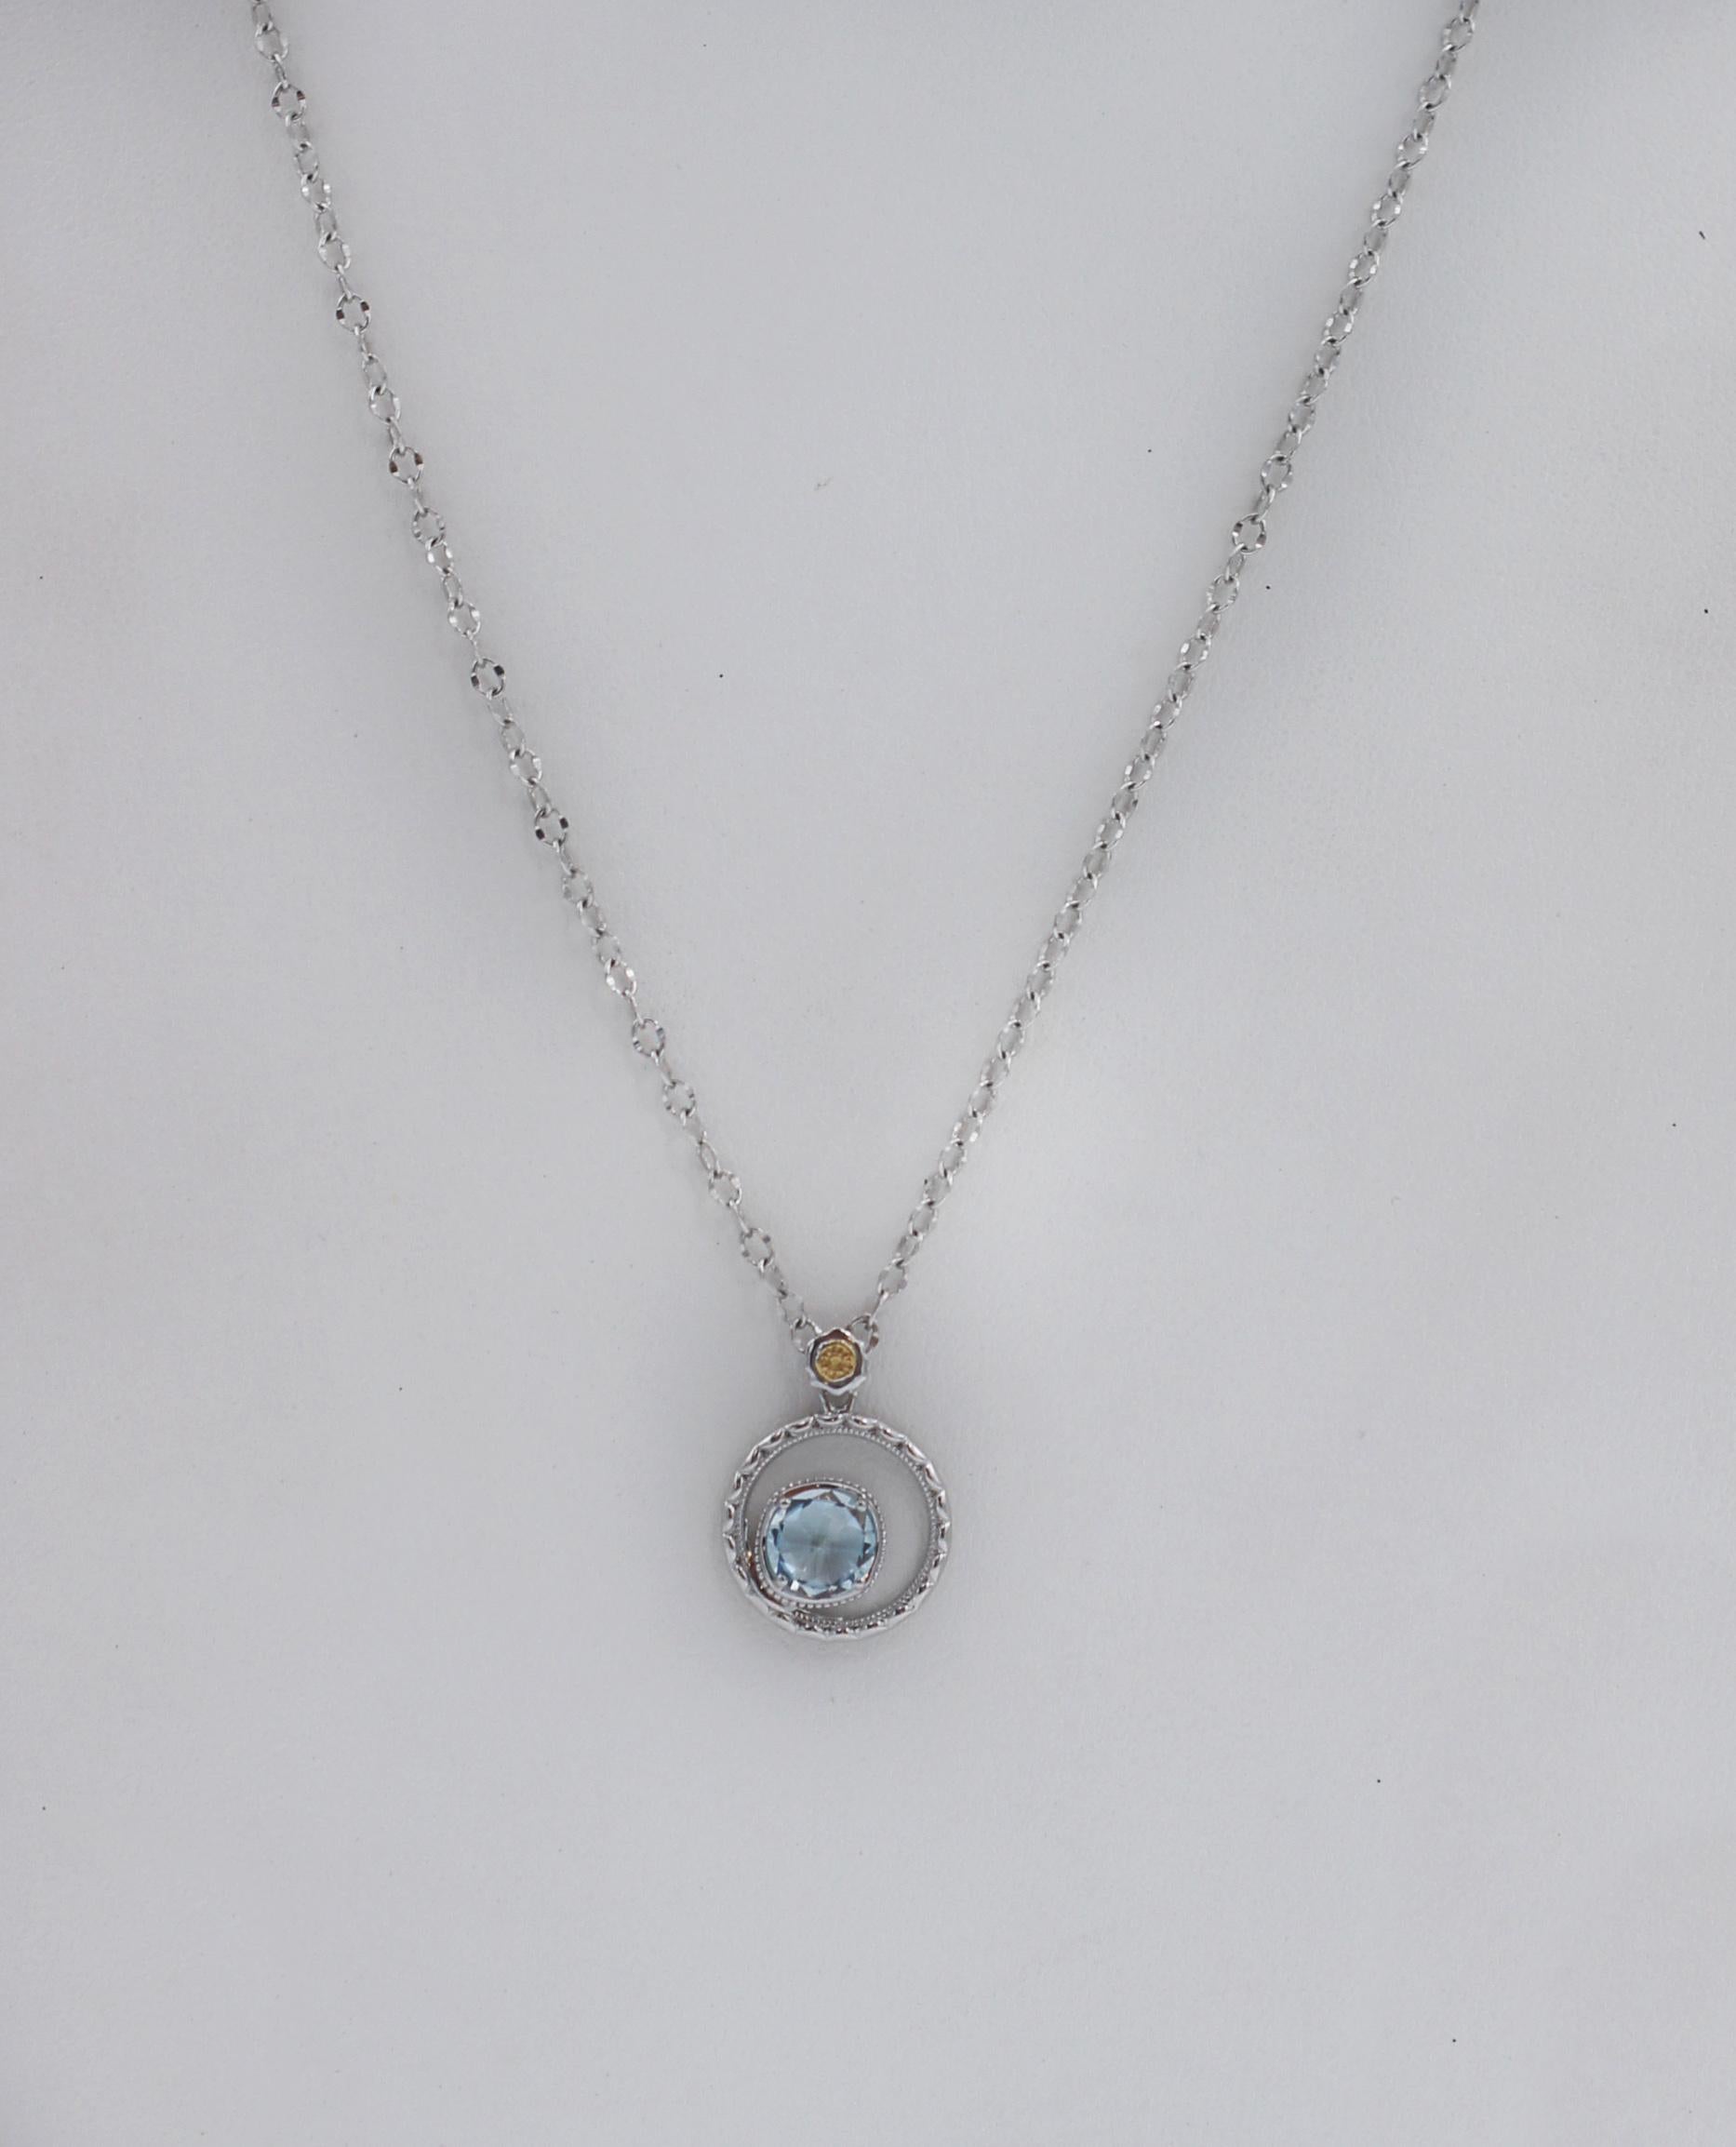 TACORI
Gemma Bloom
Silver Bloom Necklace featuring Sky Blue Topaz
STYLE: SN14002
925 silver
7mm Amethyst
18